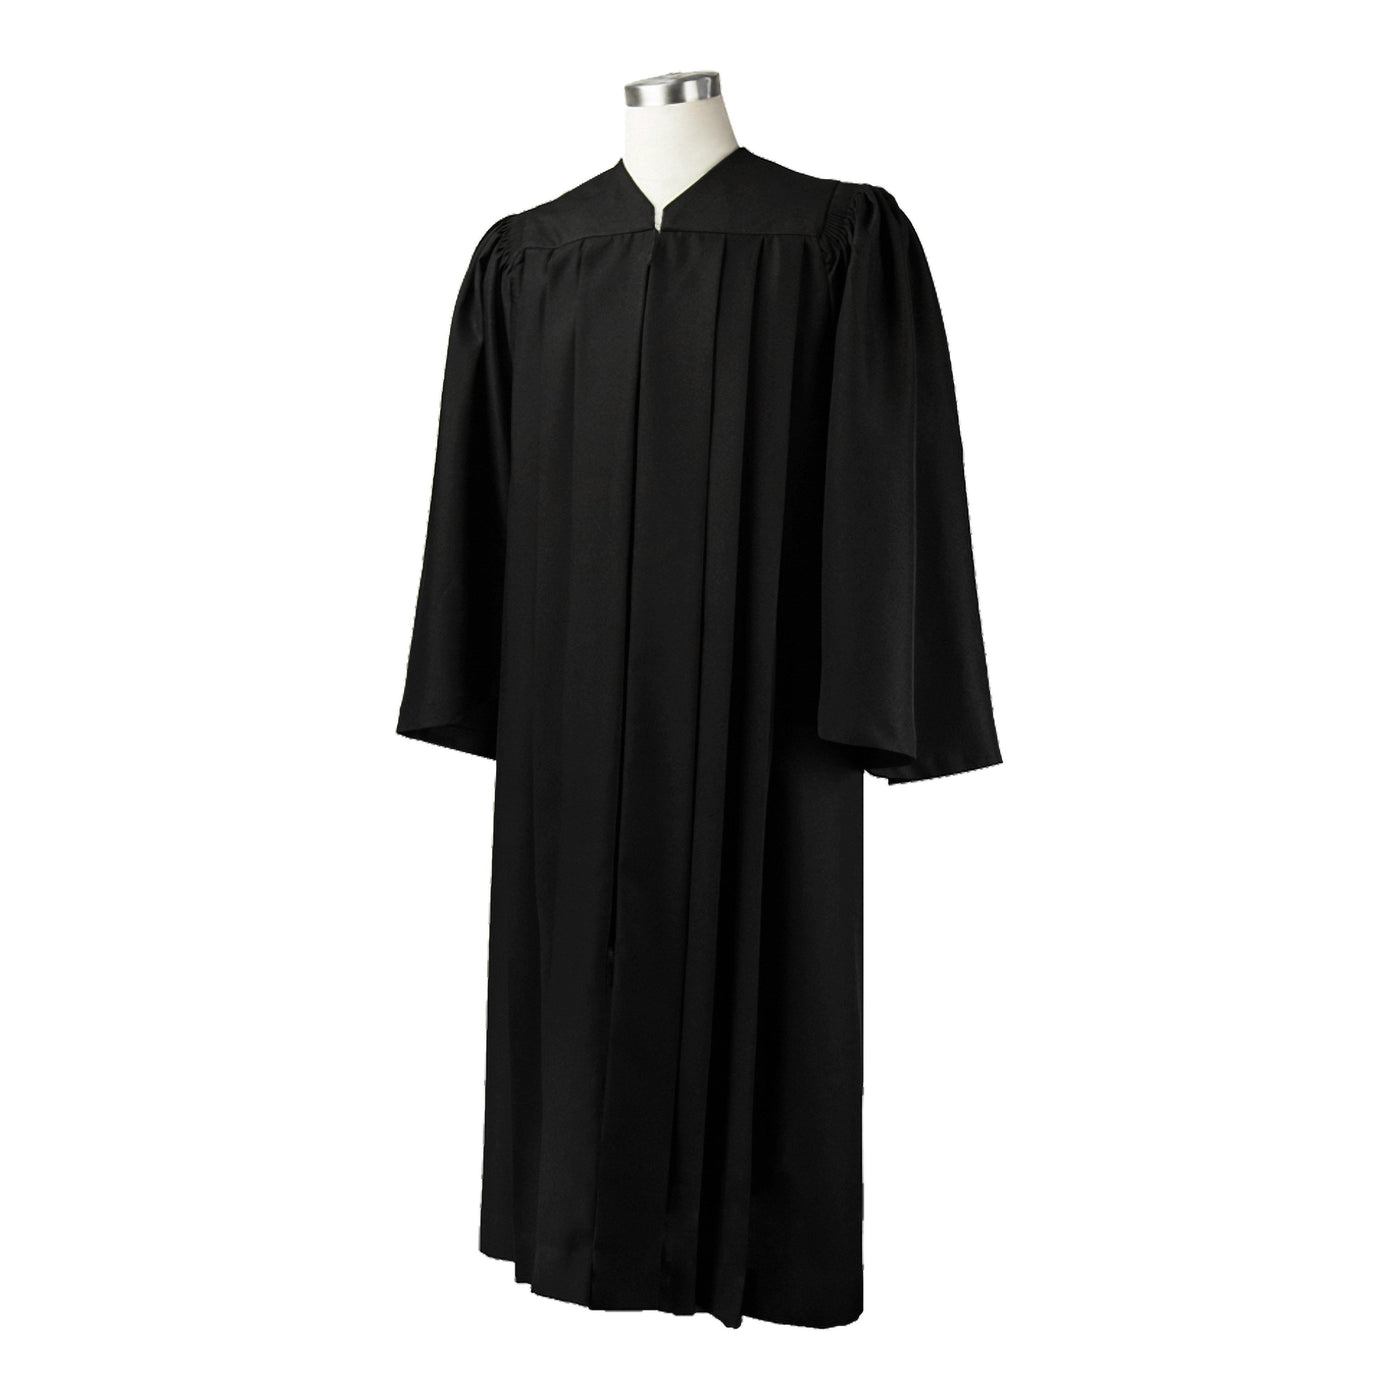 Principal Judge Robe - Judicial Shop